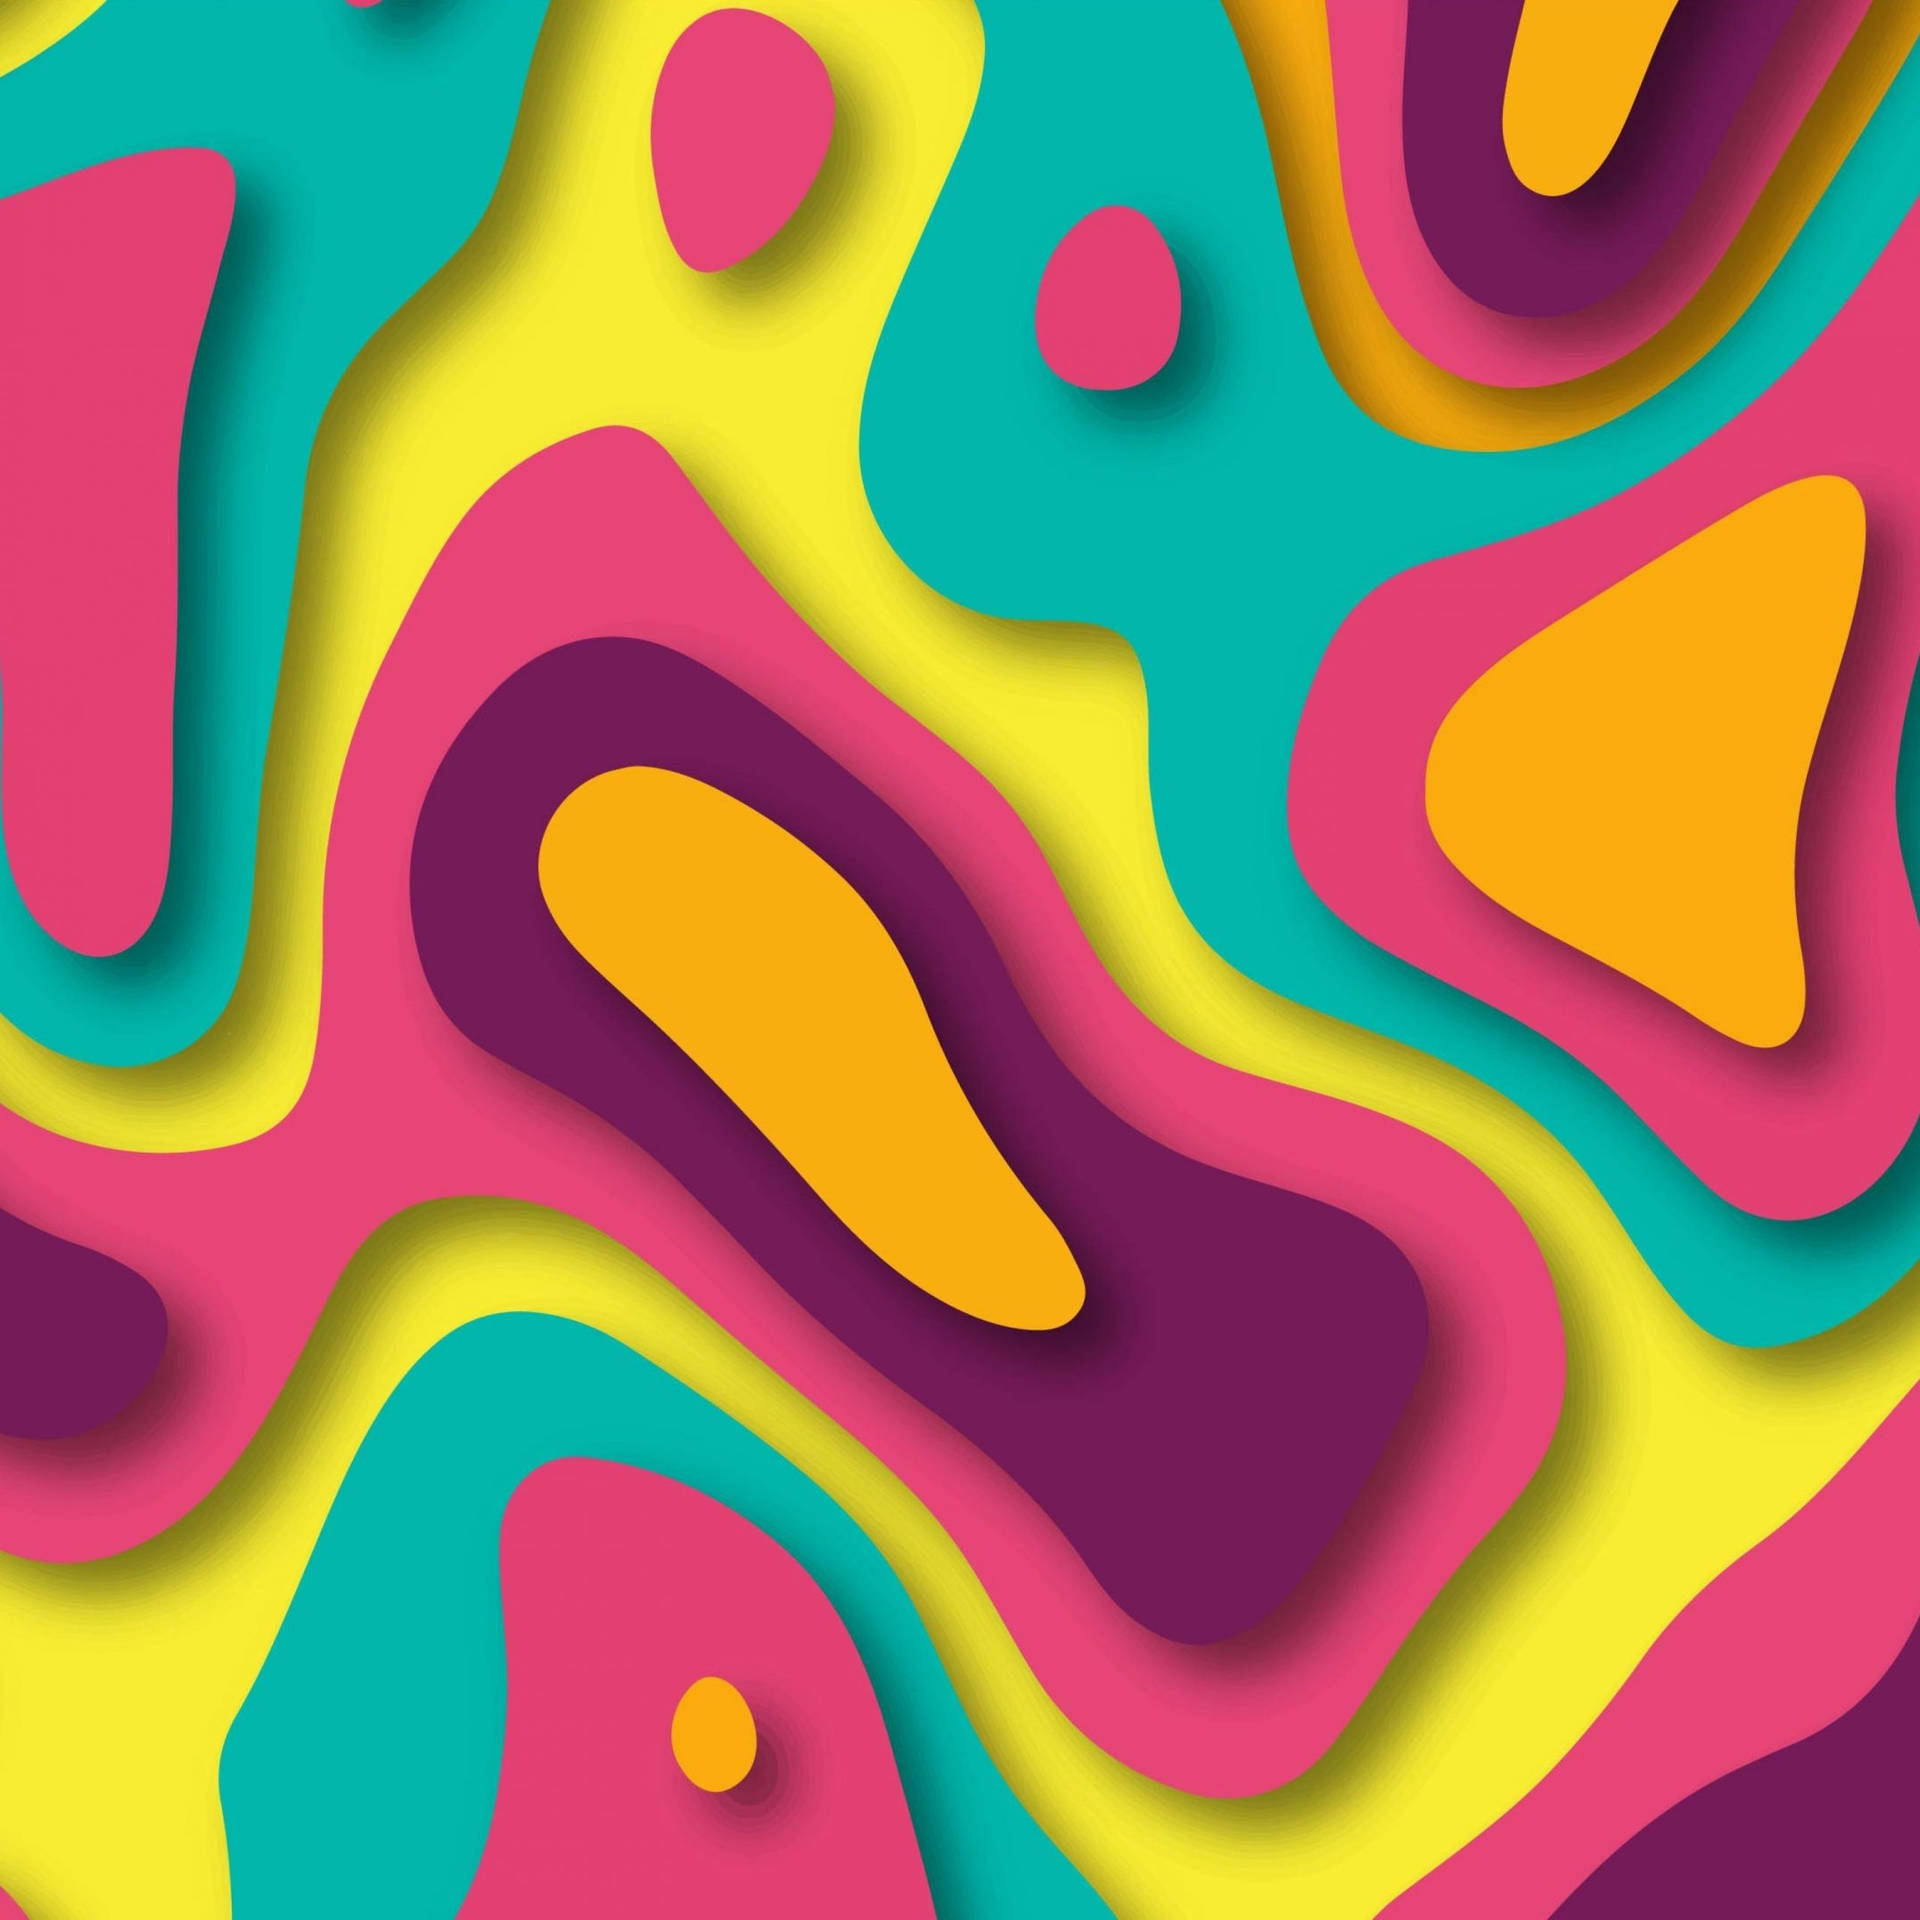 Ipad Pro 12.9 Colorful Shapes Background